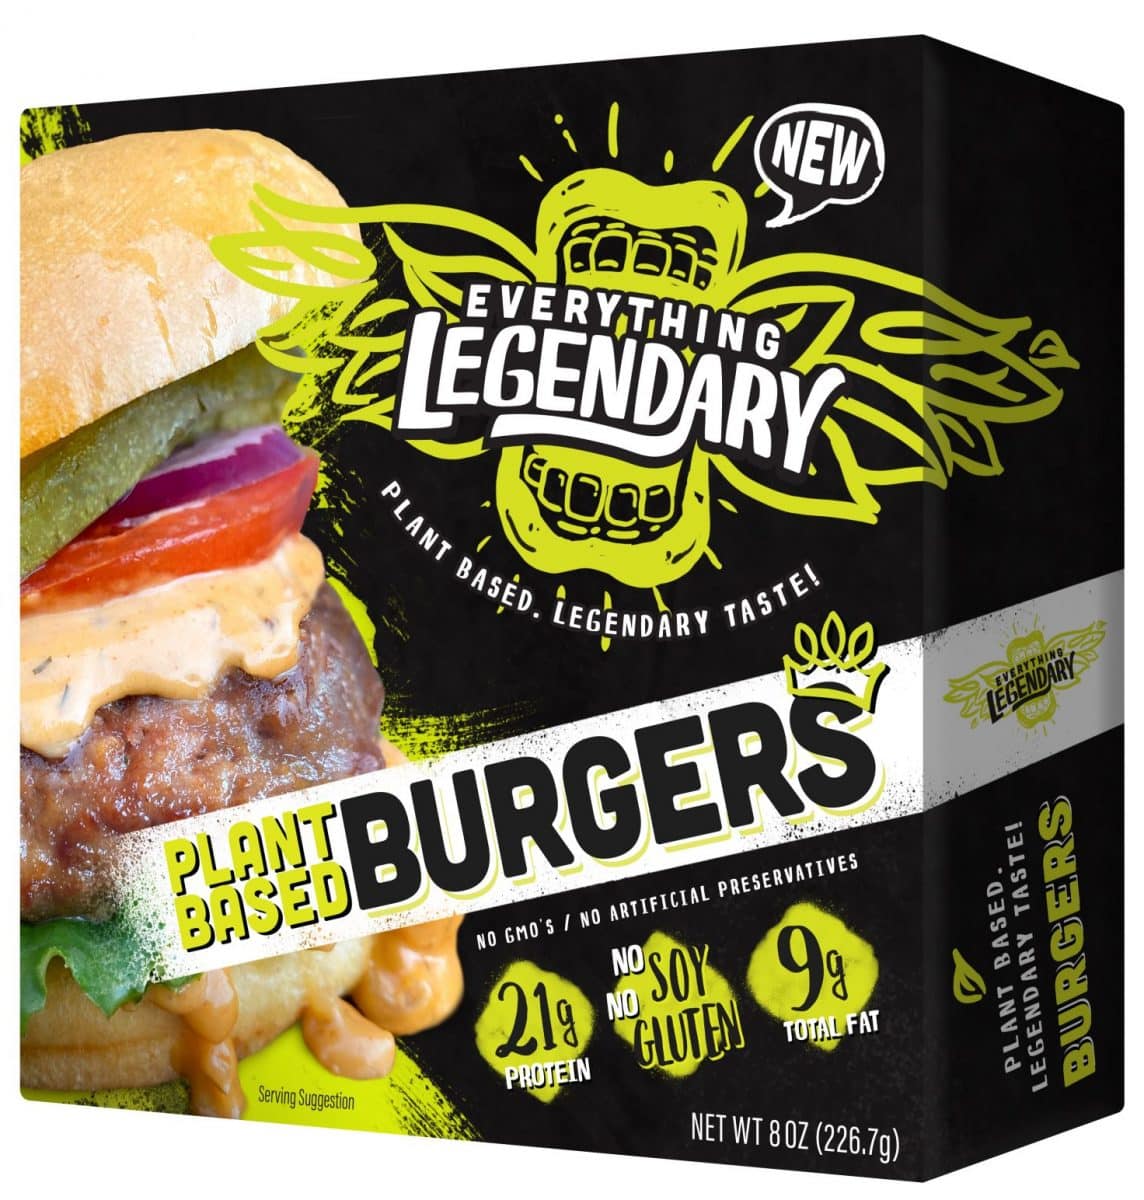 Legendary Burger packaging, 2pk